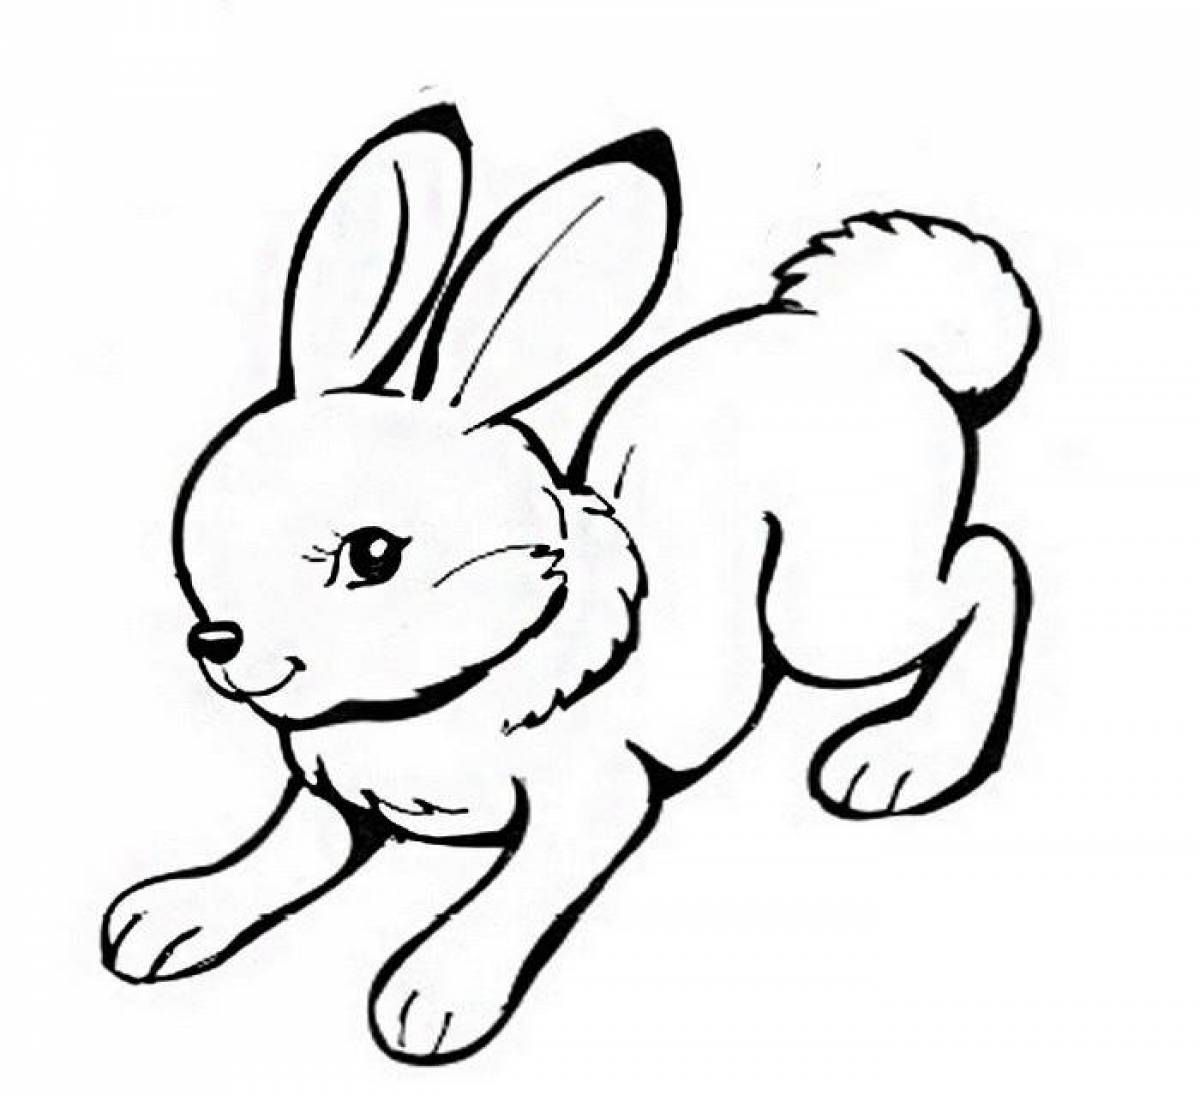 Long-eared rabbit coloring book